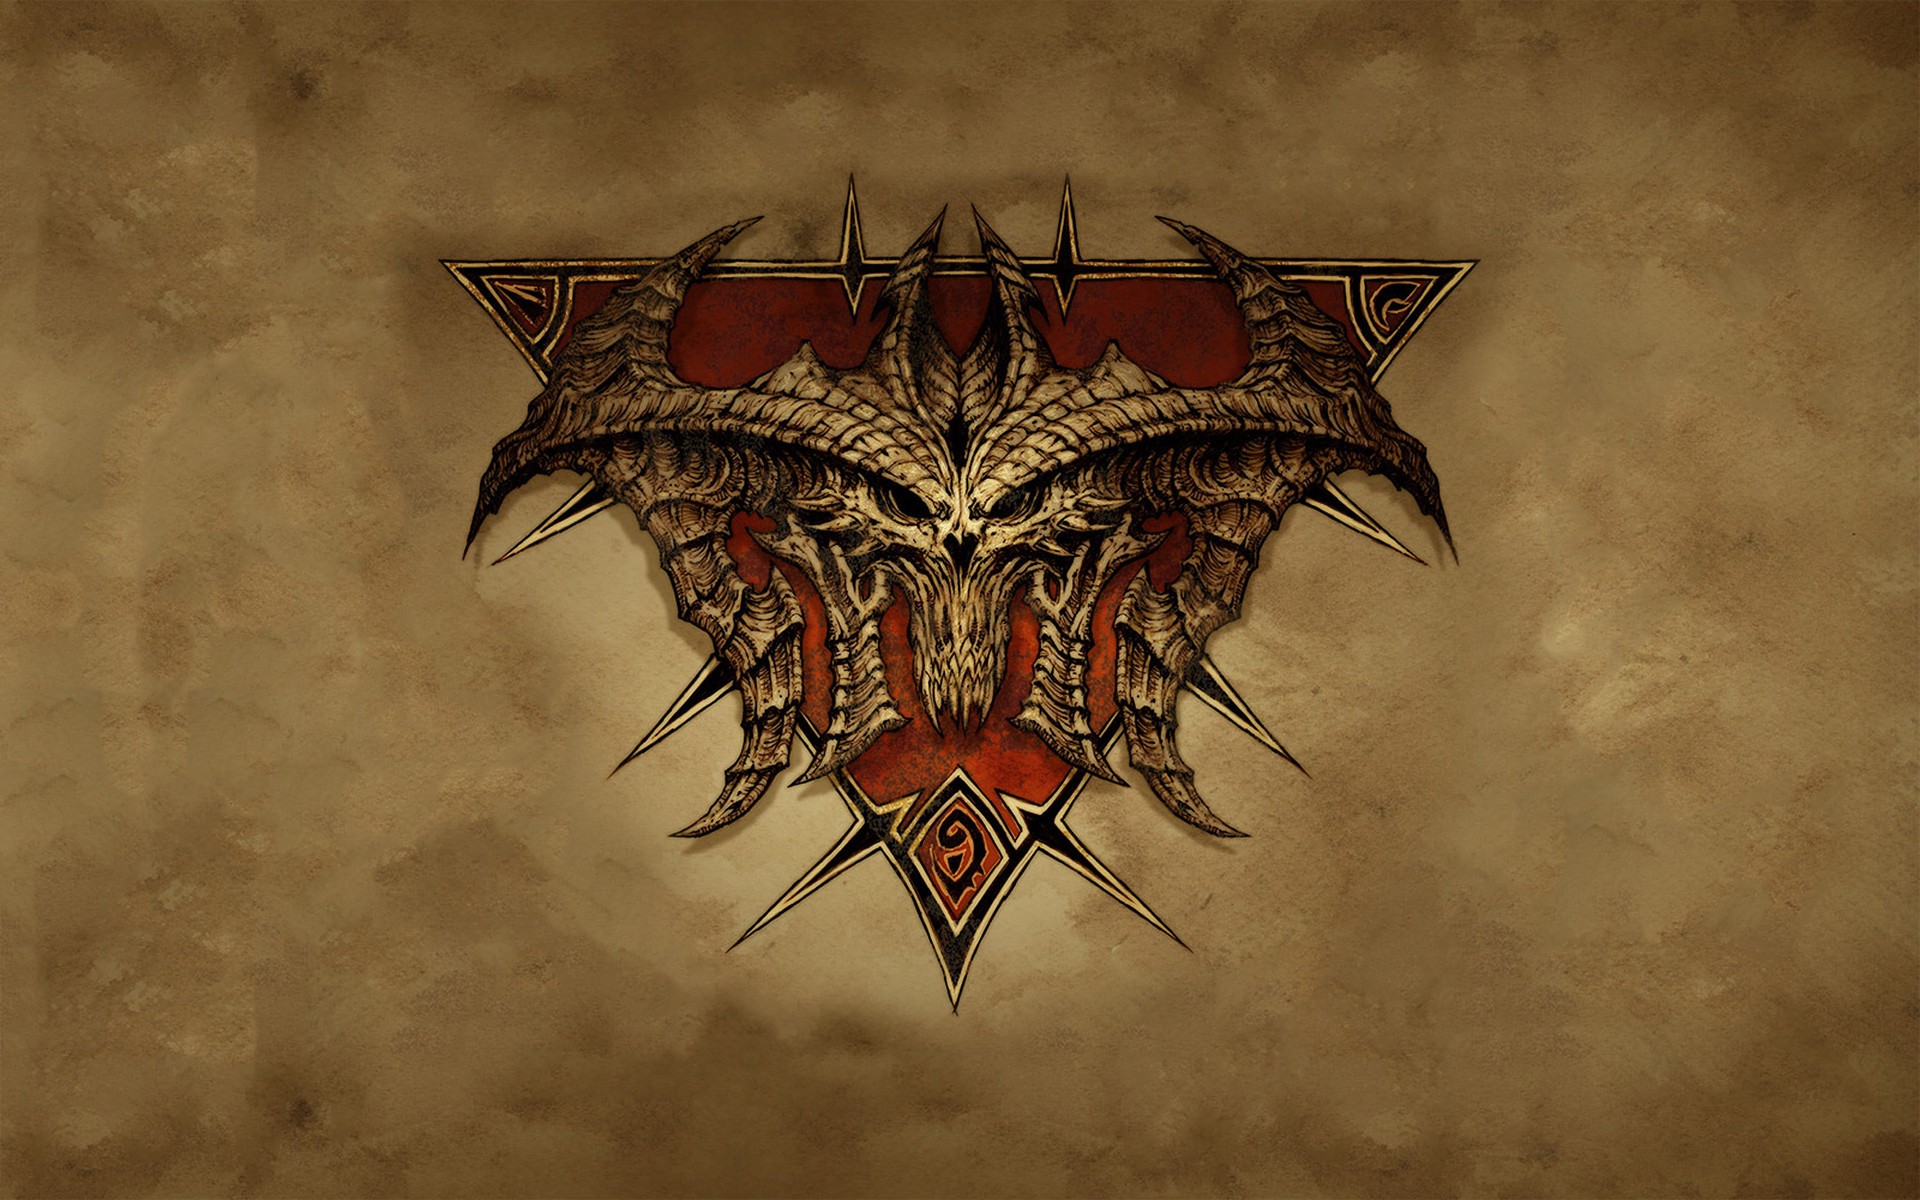 Blizzard Entertainment, Diablo III Wallpaper